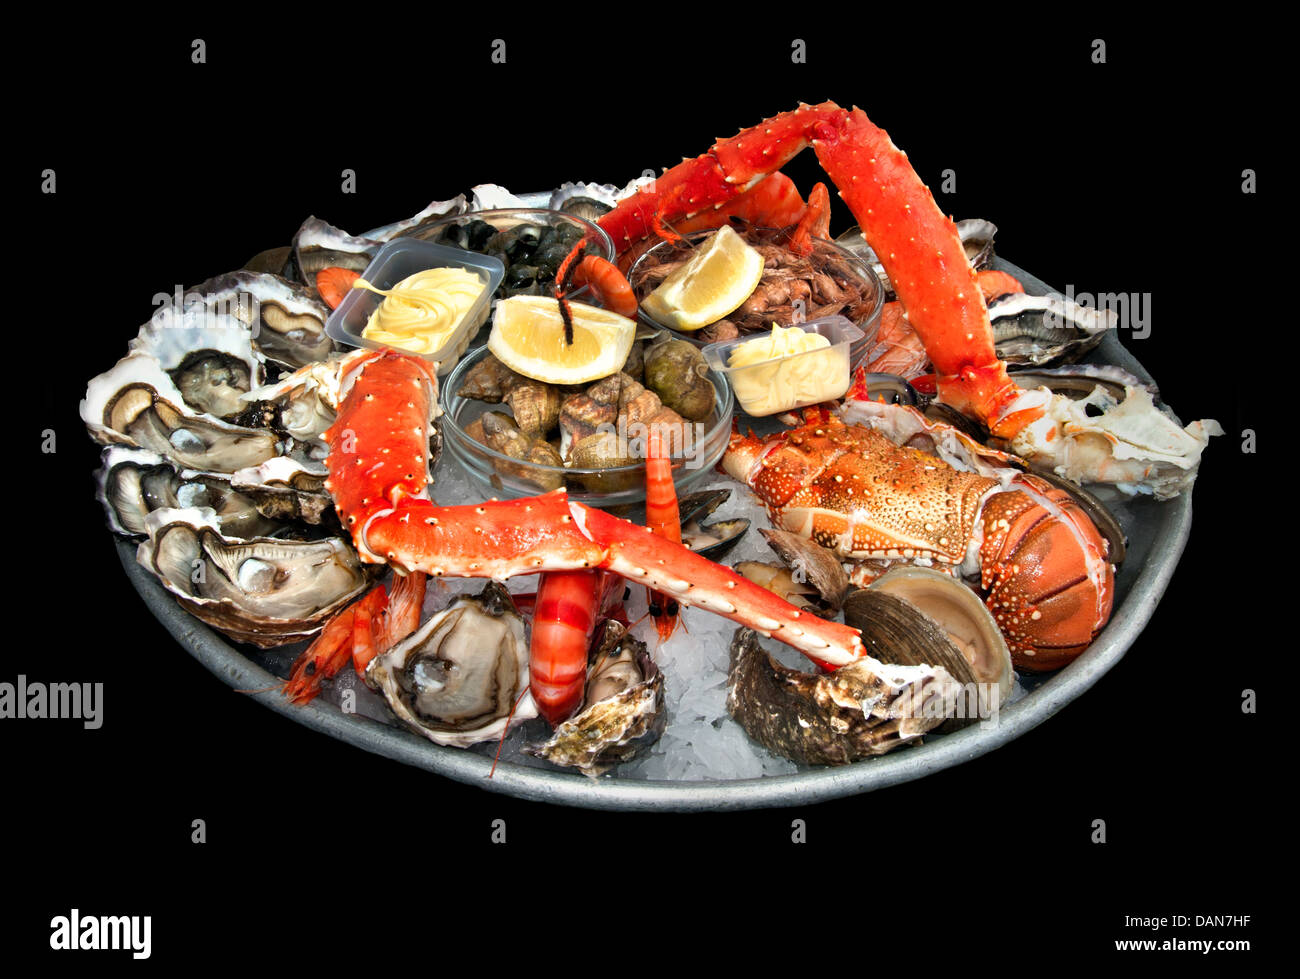 Fruits de Mer französische Meeresfrüchte Austern Garnelen Hummer Immergrün Krabben Garnelen Scampi Muscheln Muscheln Muscheln Stockfoto